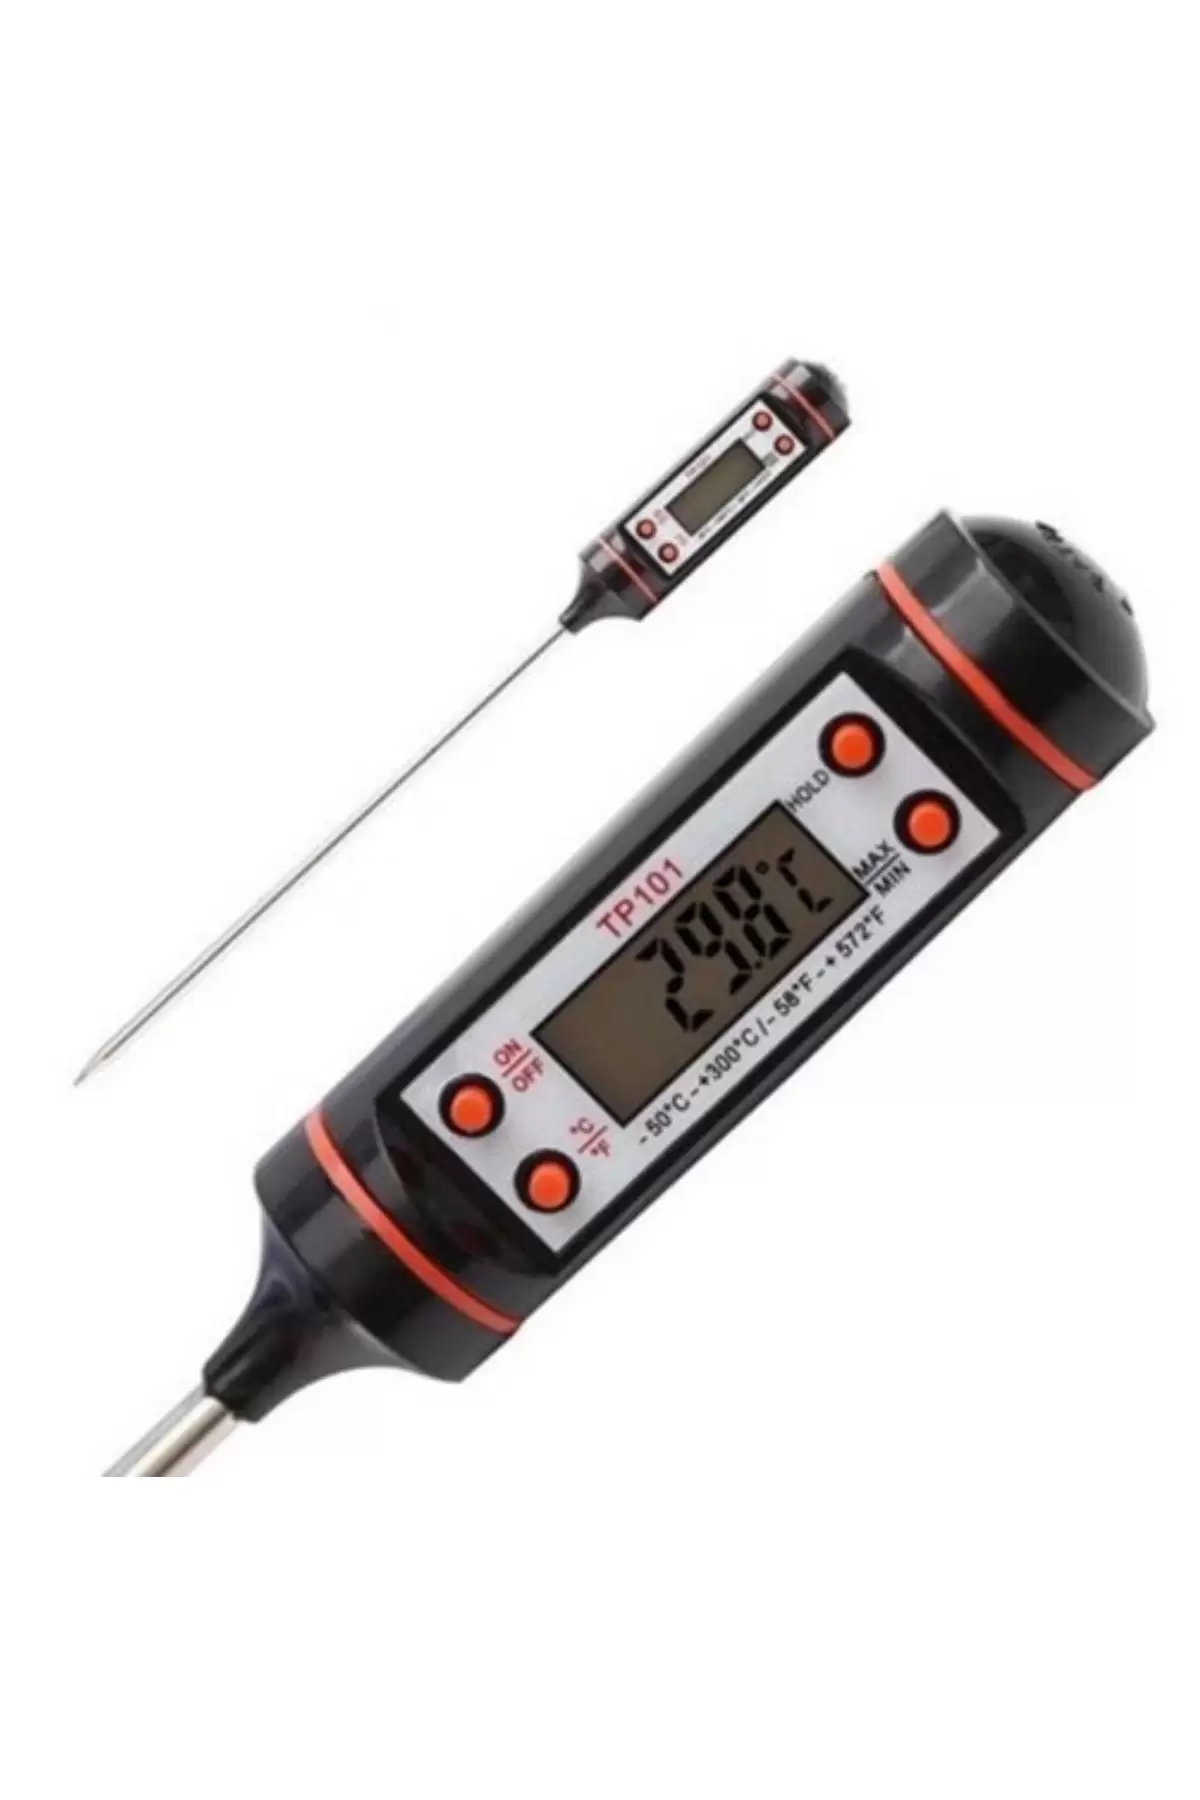 Epinox DT03 Digital Termometre